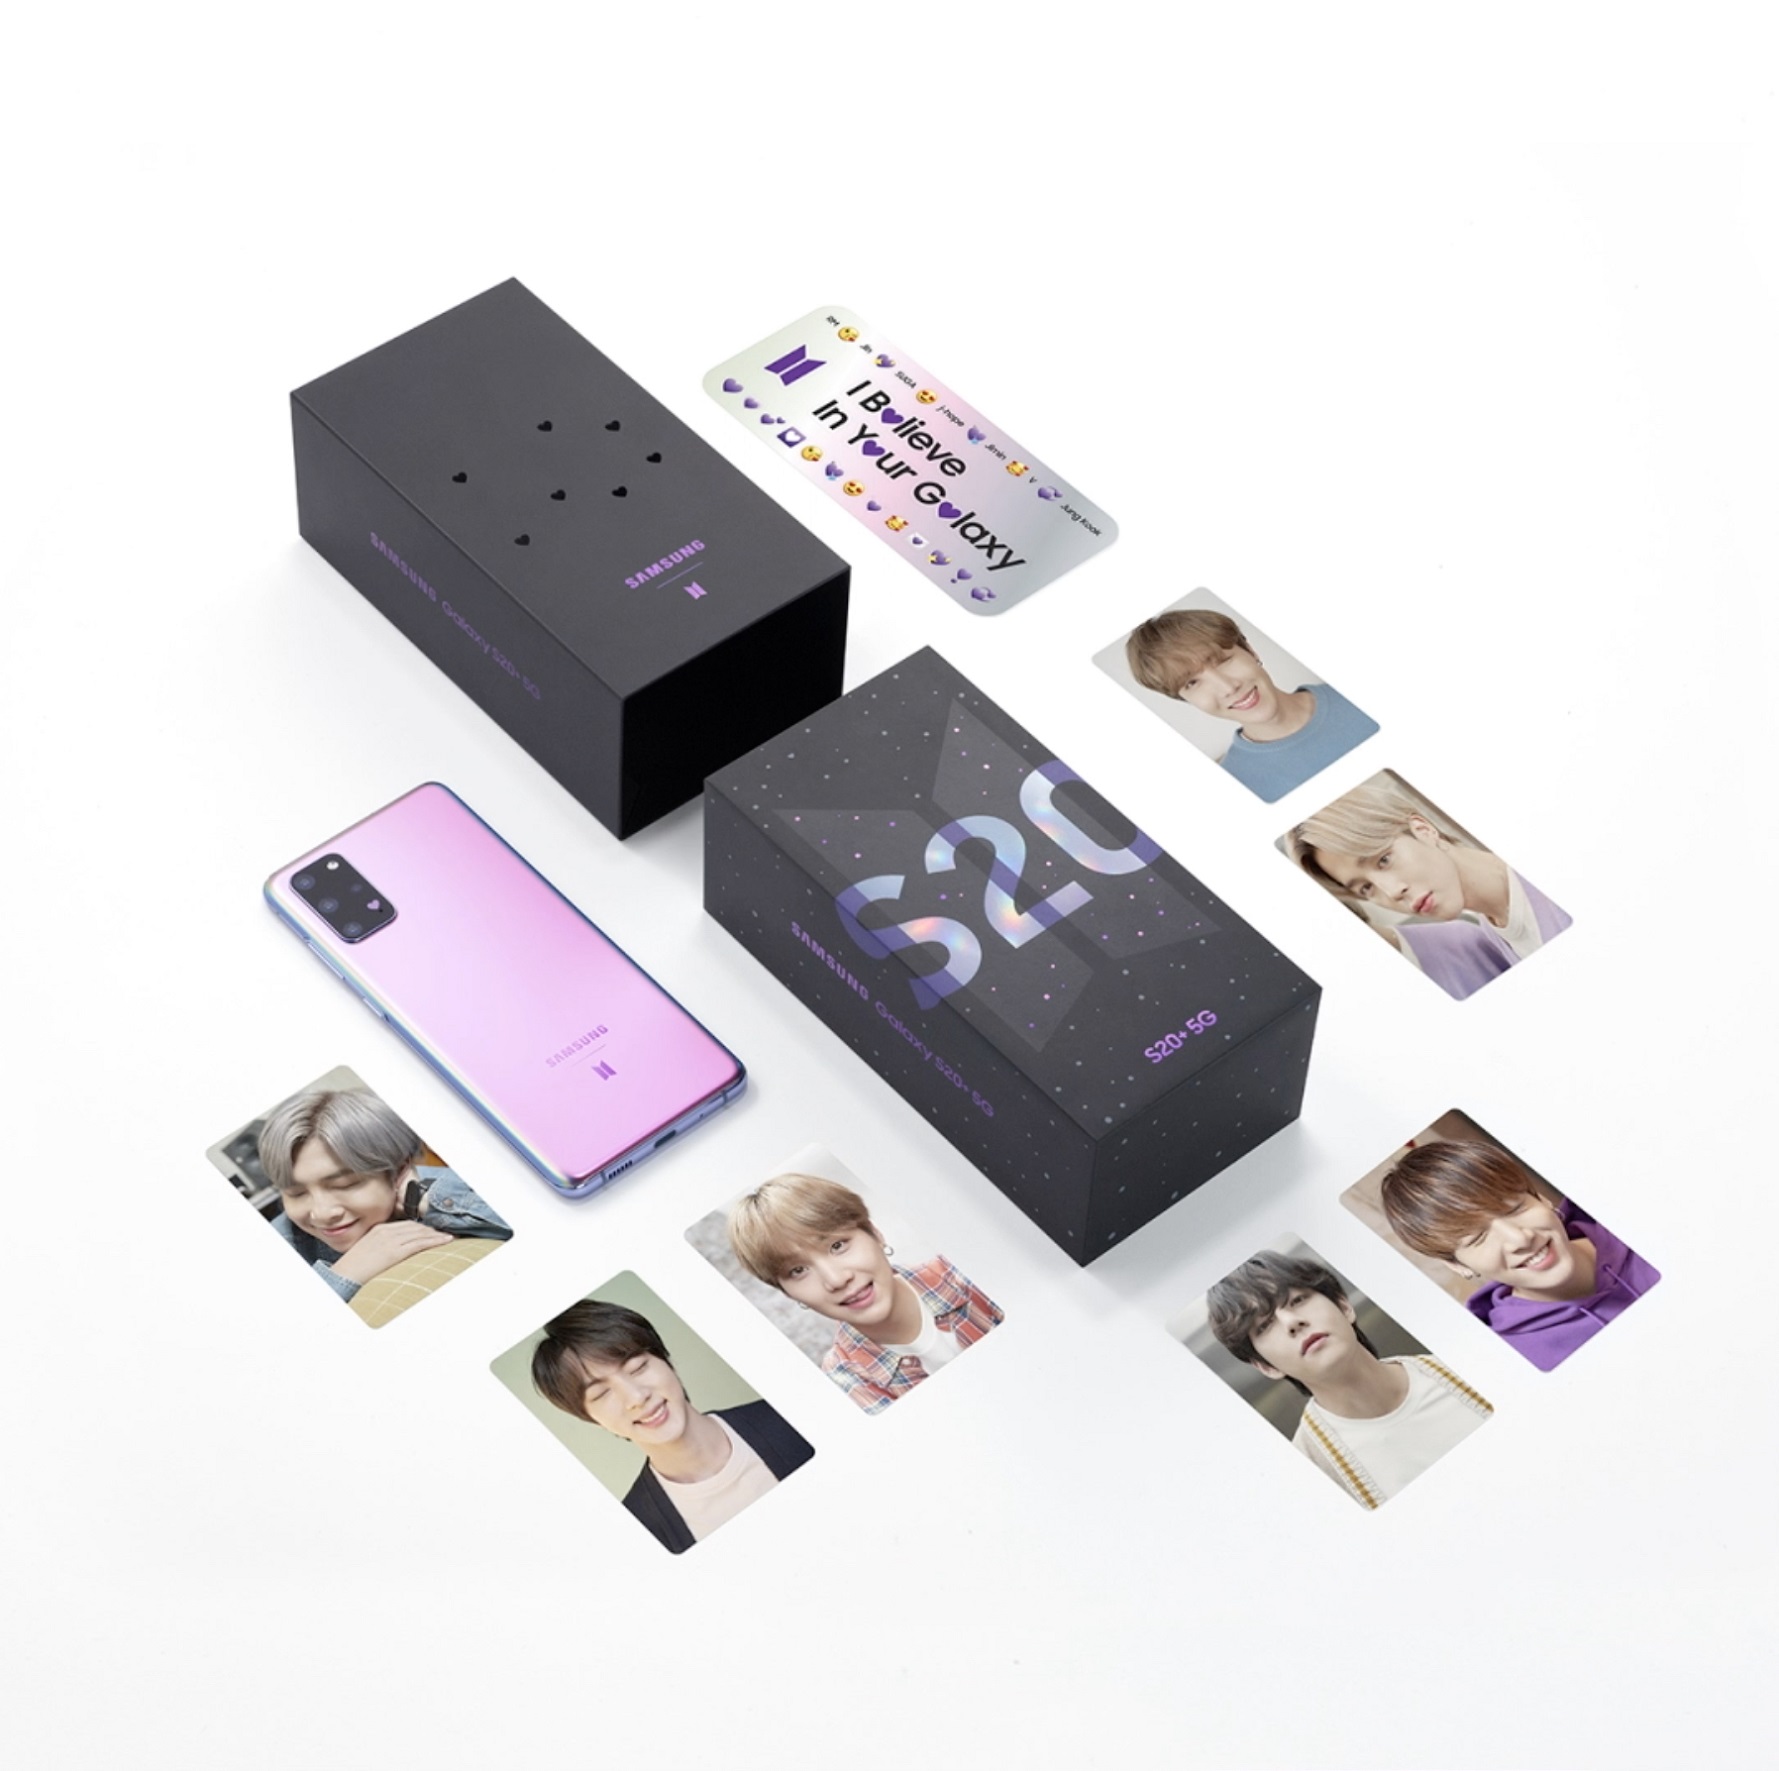 S20 BTS Edition Box set